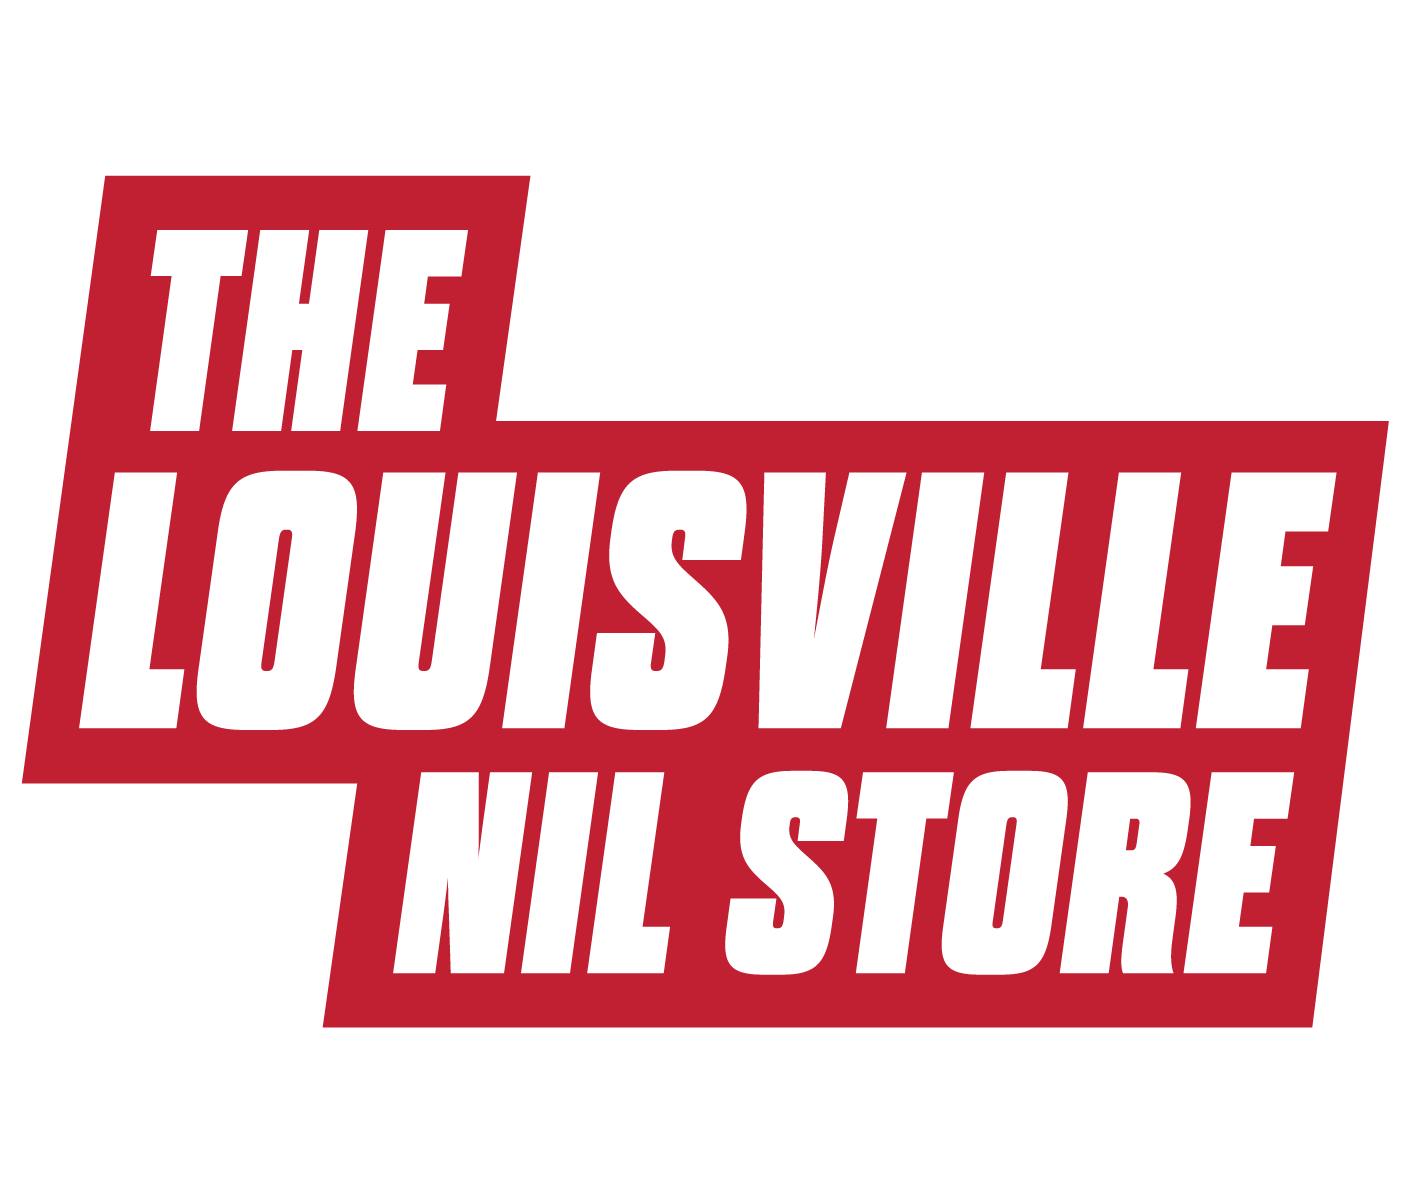 Men's Red Louisville Cardinals Custom Sport Wordmark T-Shirt